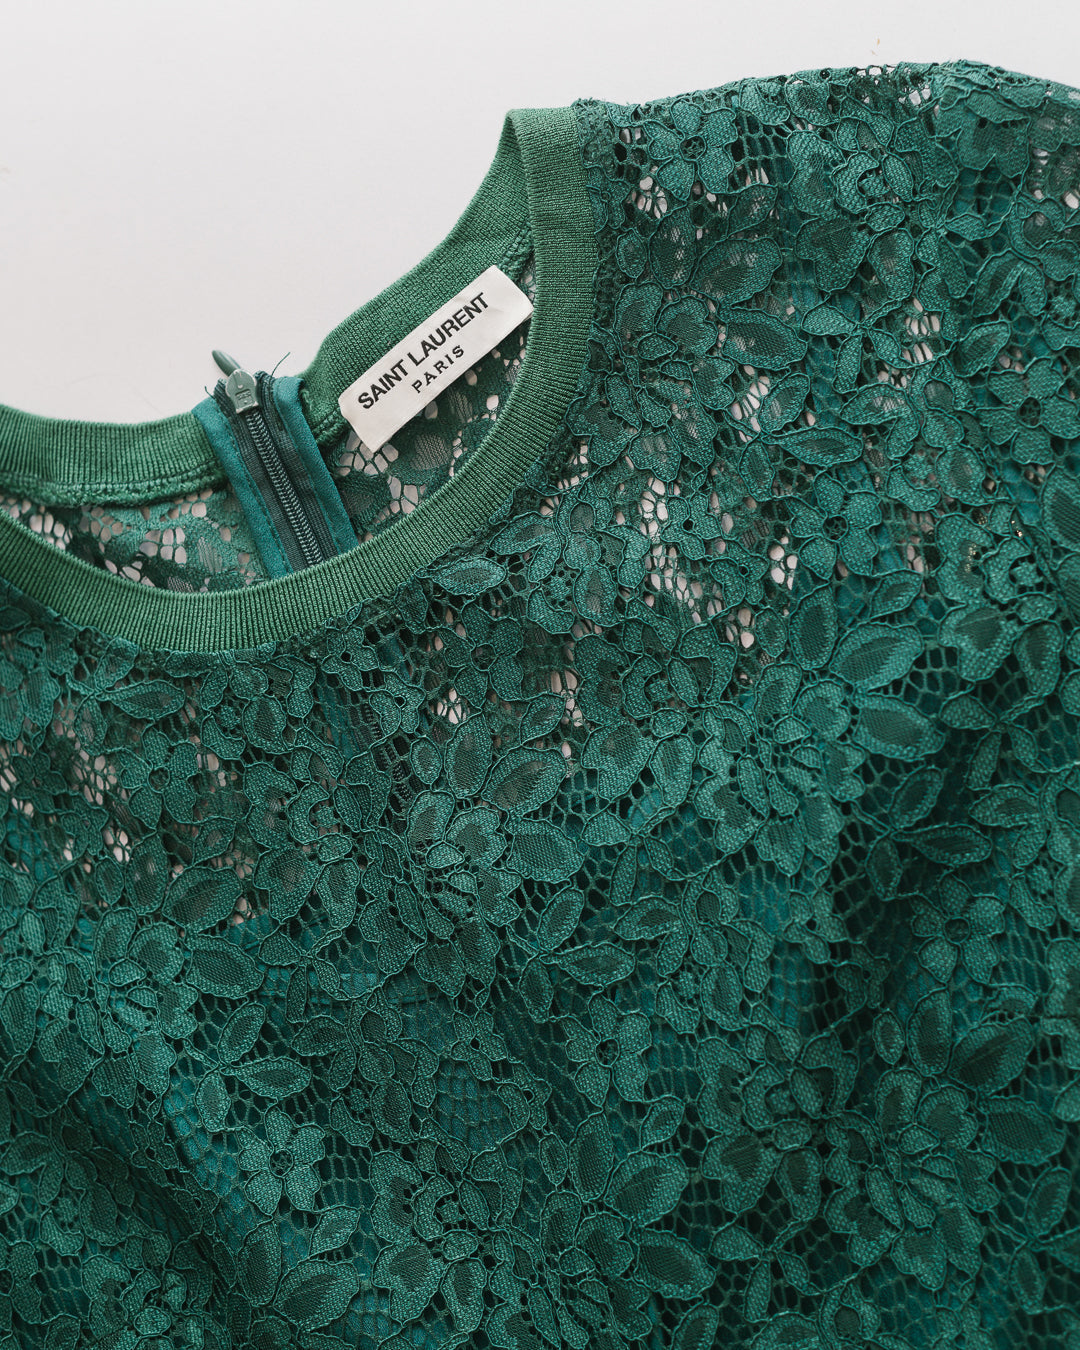 Saint Laurent Emerald Lace Midi Dress